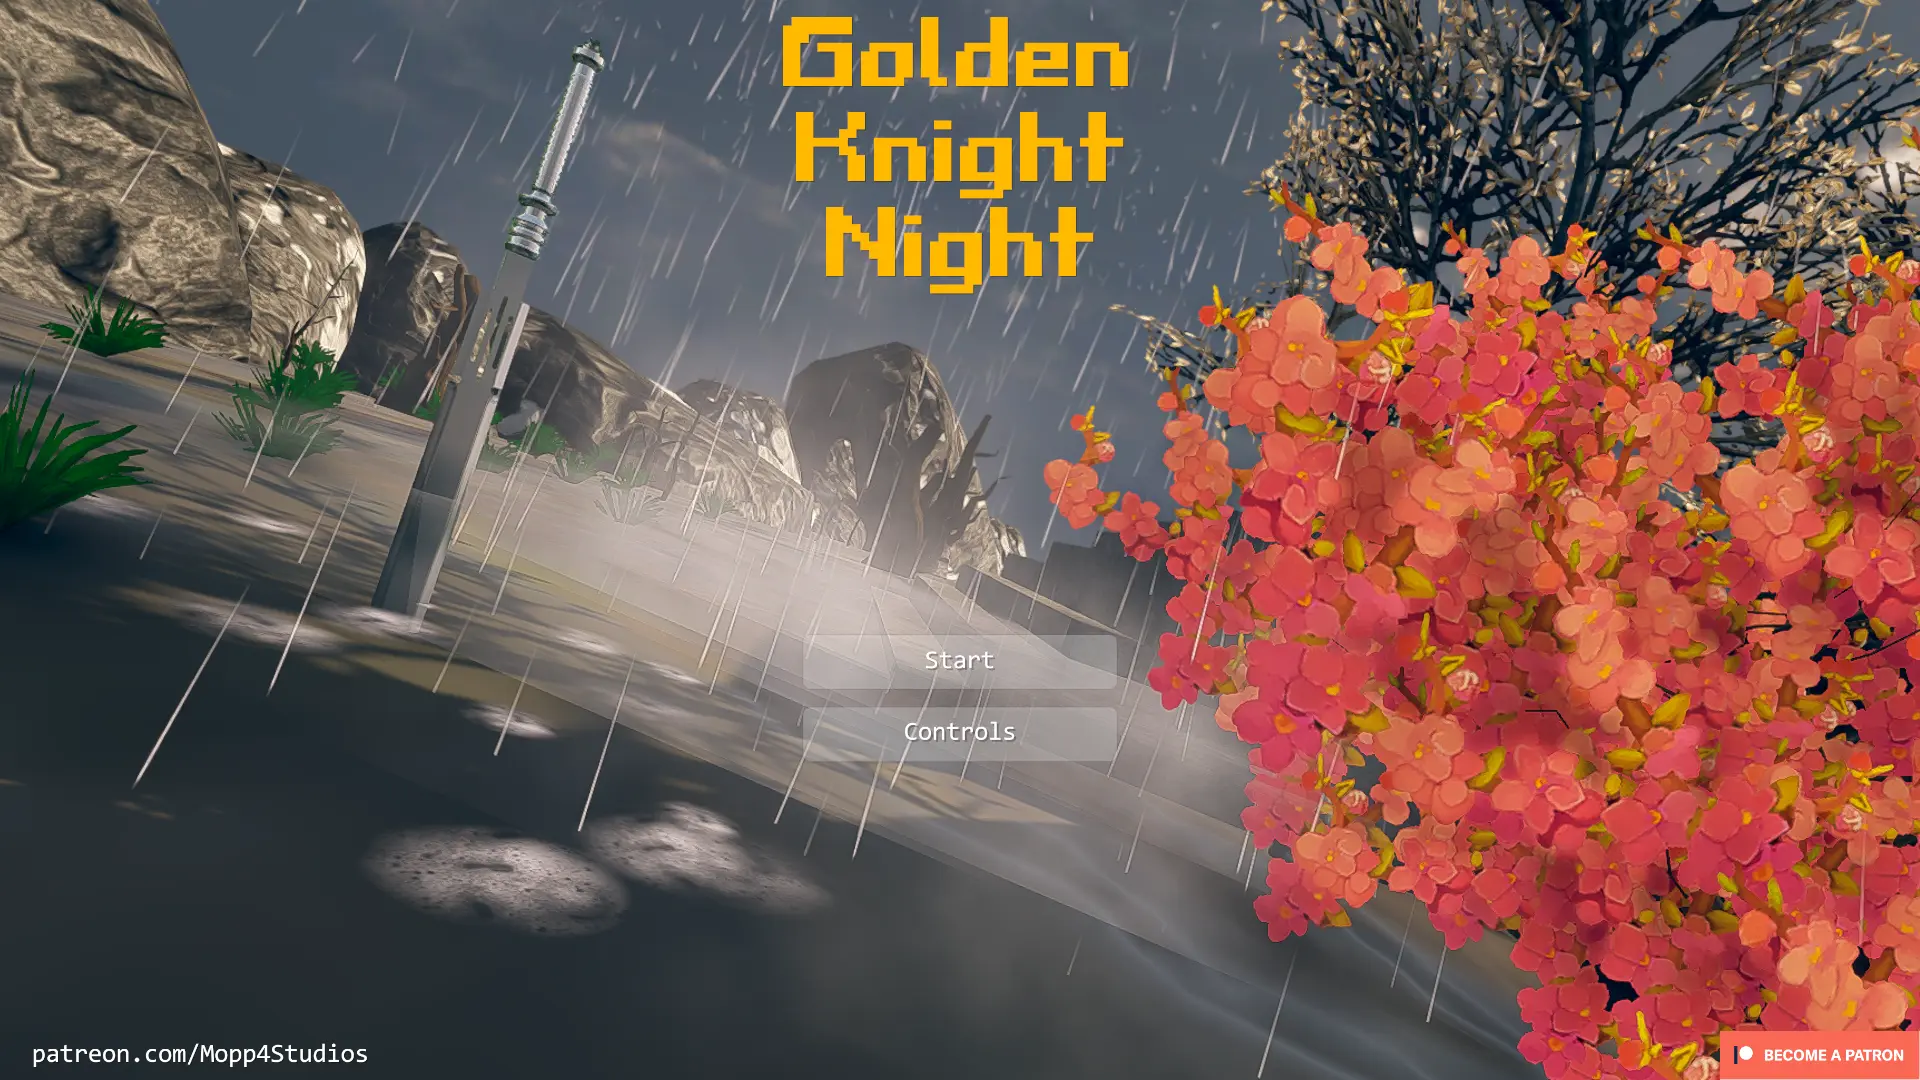 Golden Knight Night main image